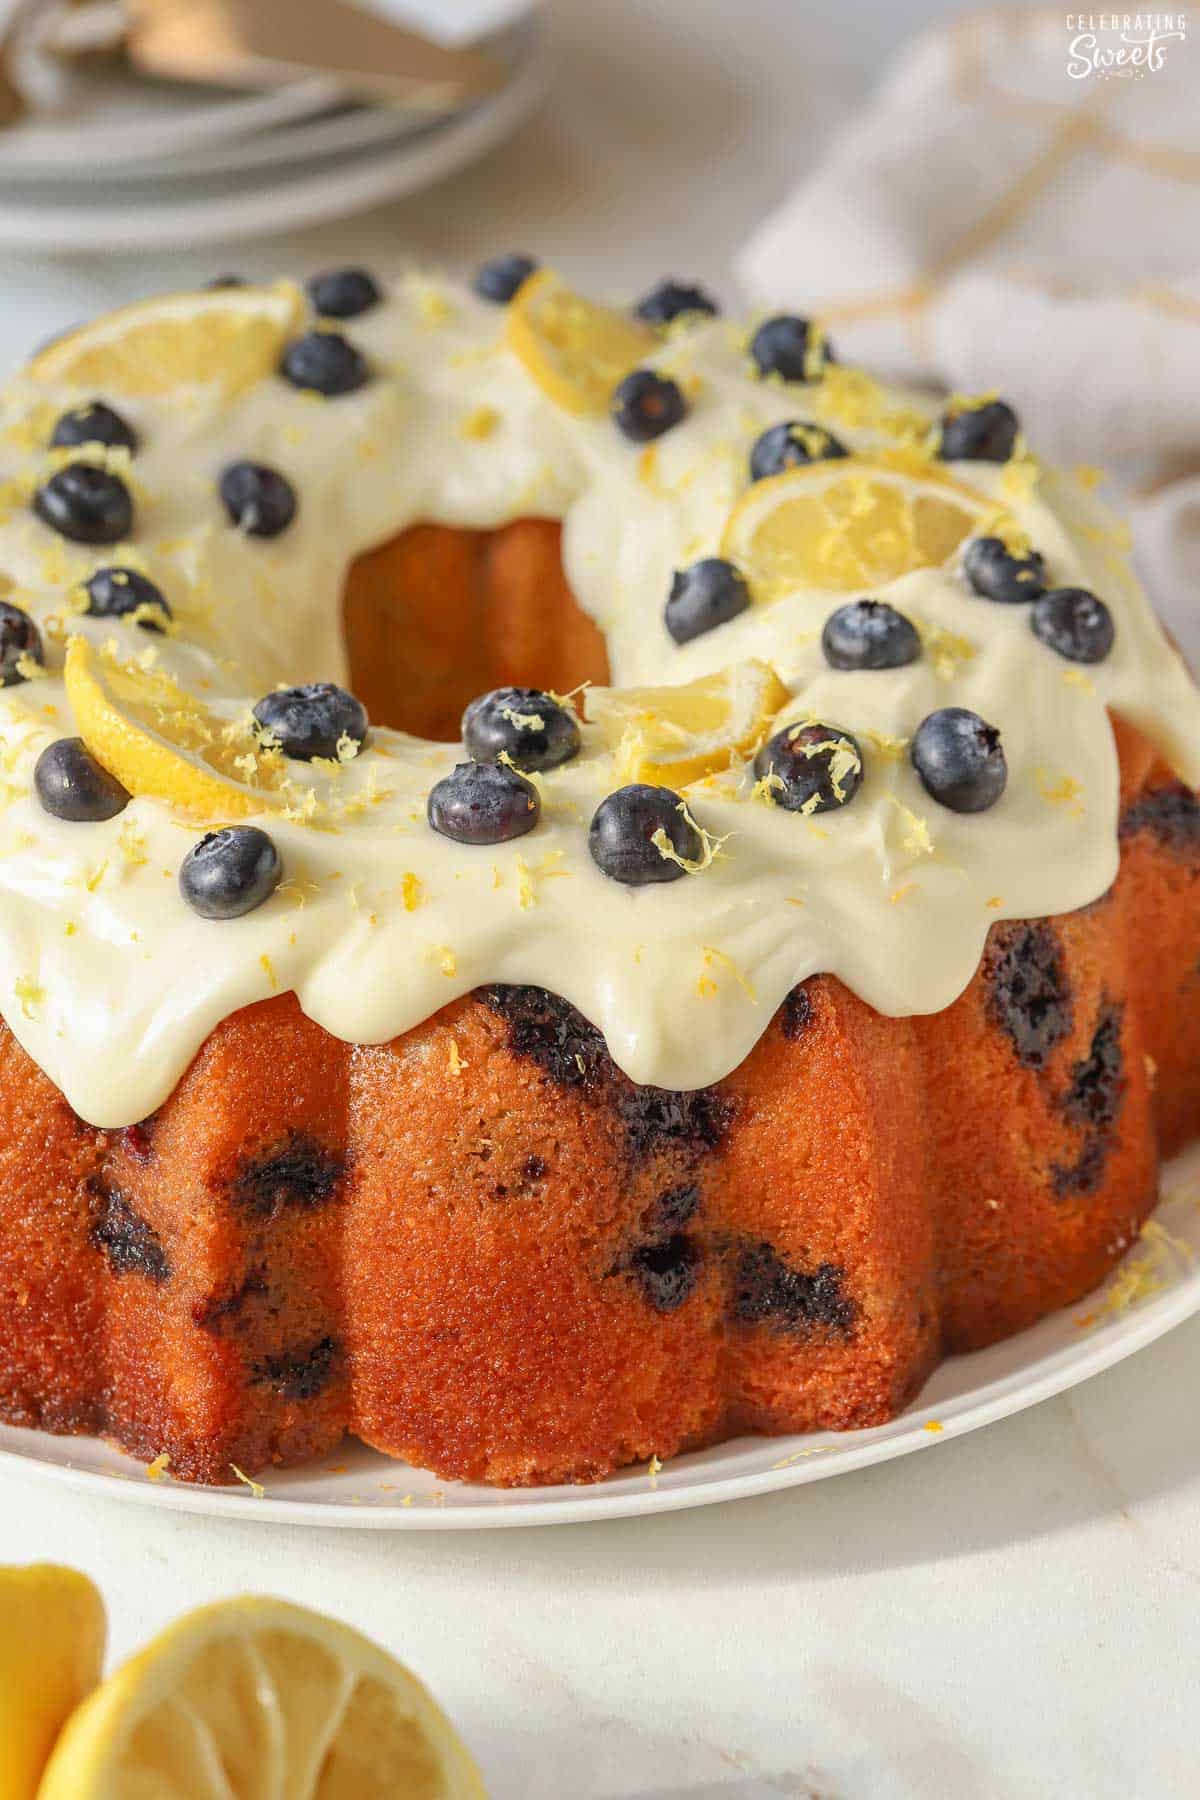 Lemon blueberry bundt cake on a white plate.